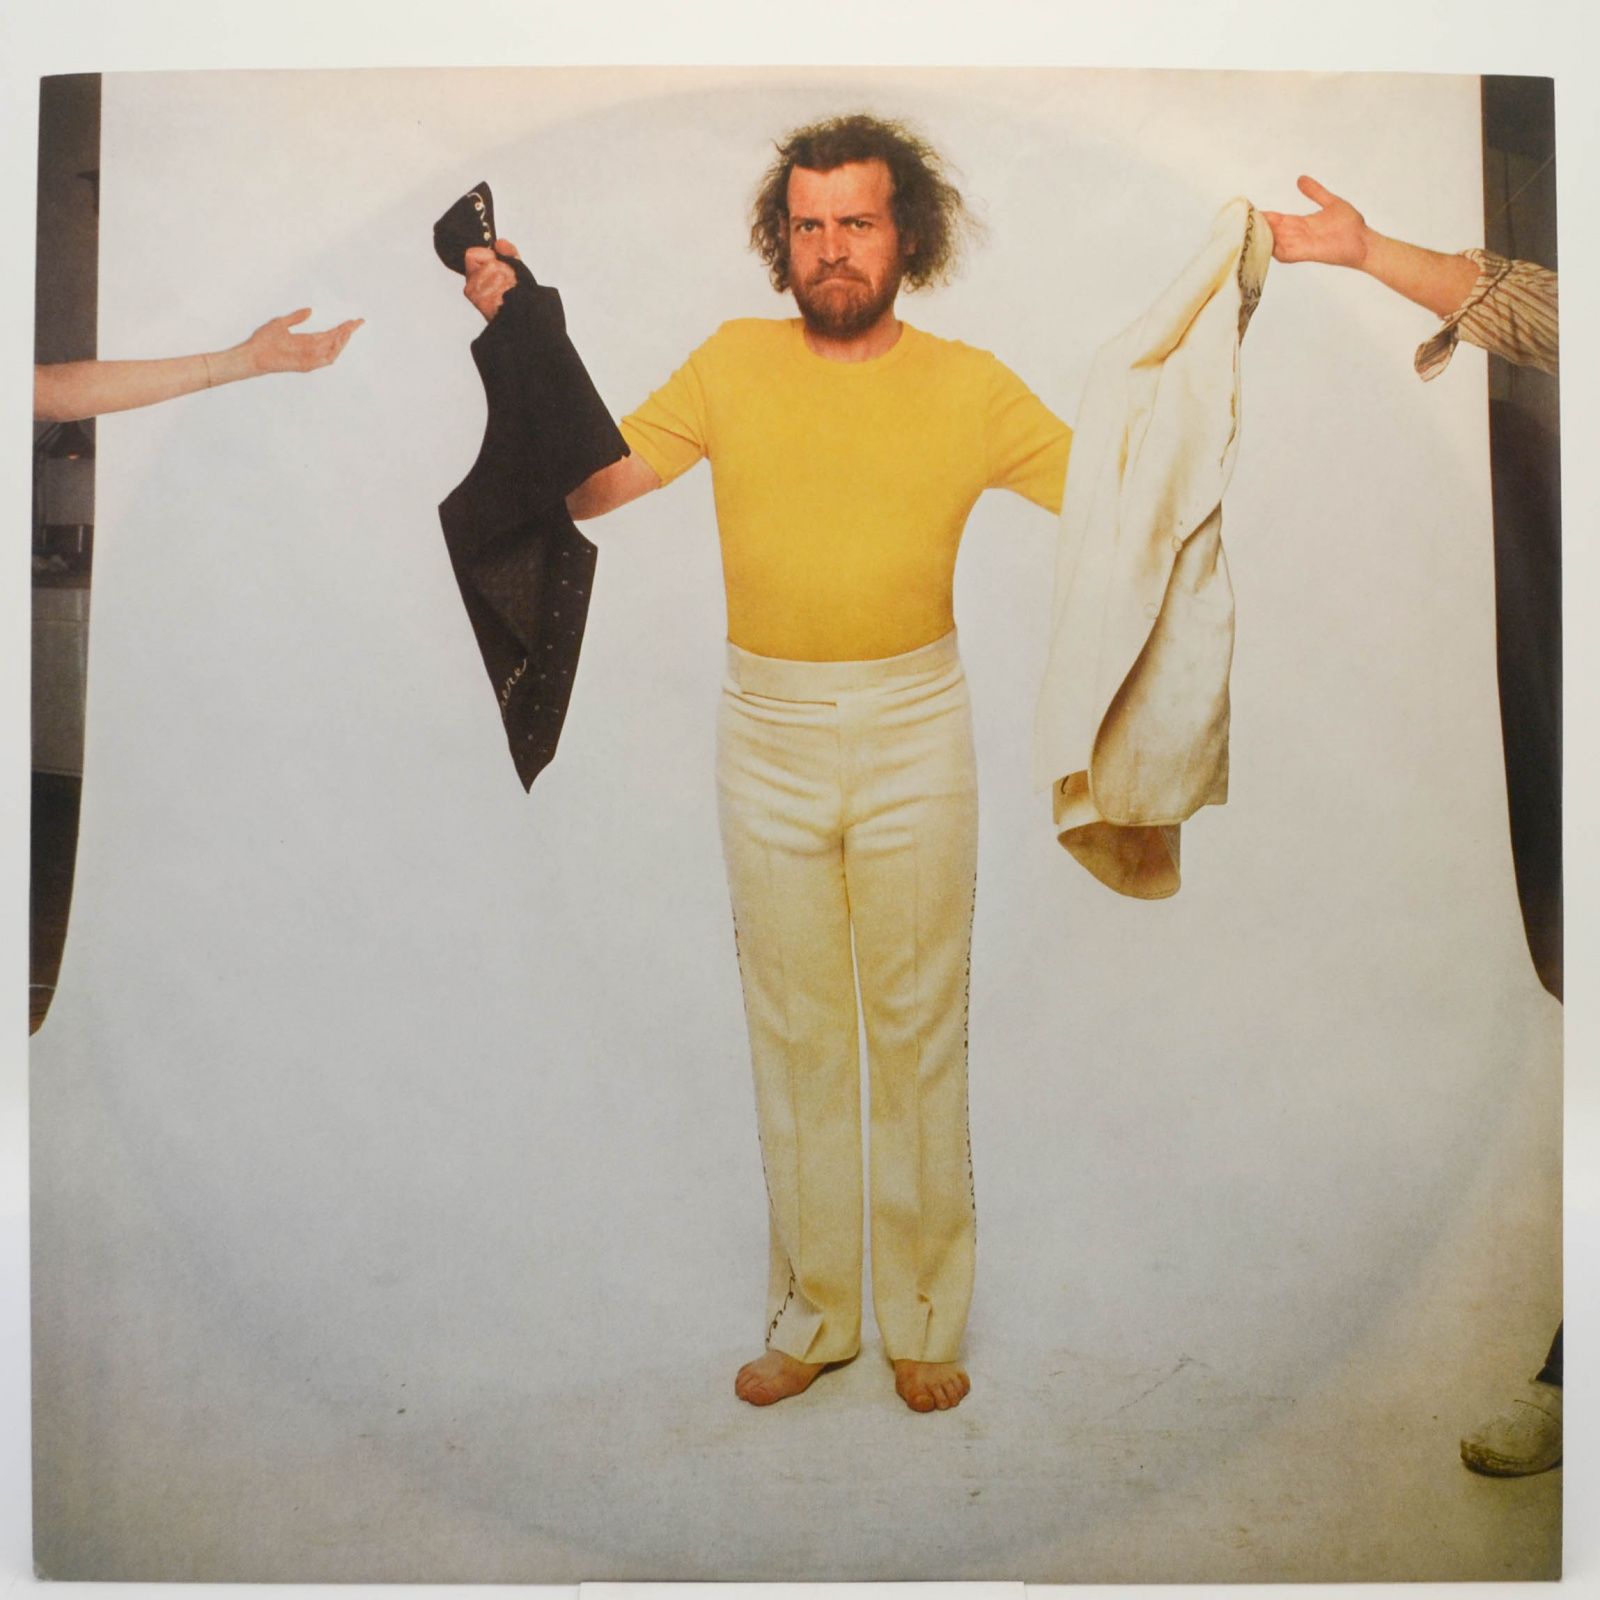 Joe Cocker — Luxury You Can Afford, 1978